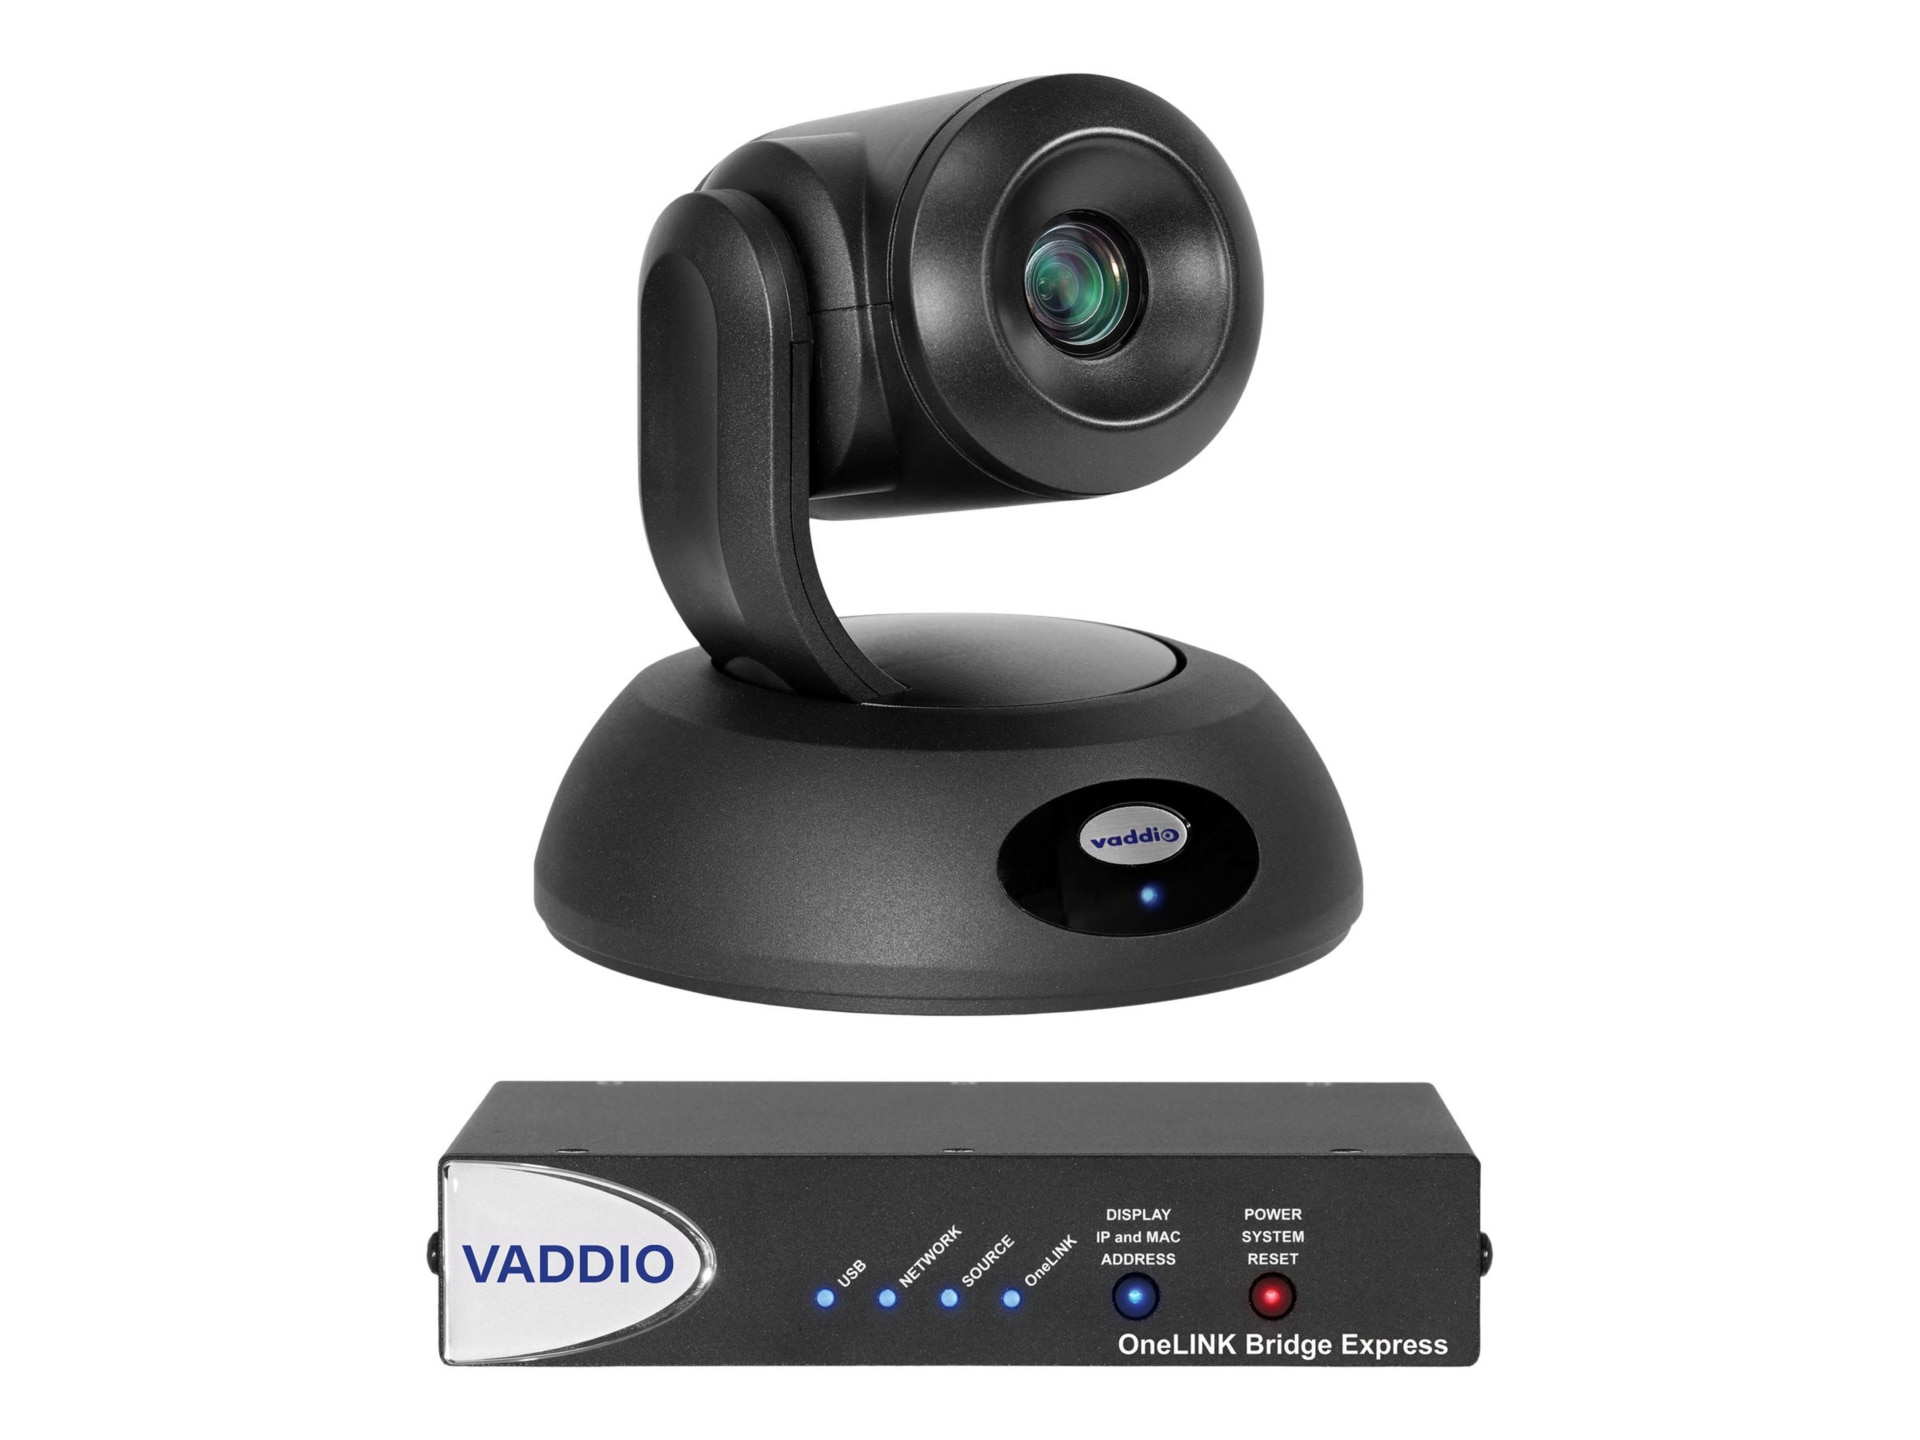 Vaddio RoboSHOT 30E HDBT OneLINK Bridge Express Video Conferencing System - Includes PTZ Camera - Black